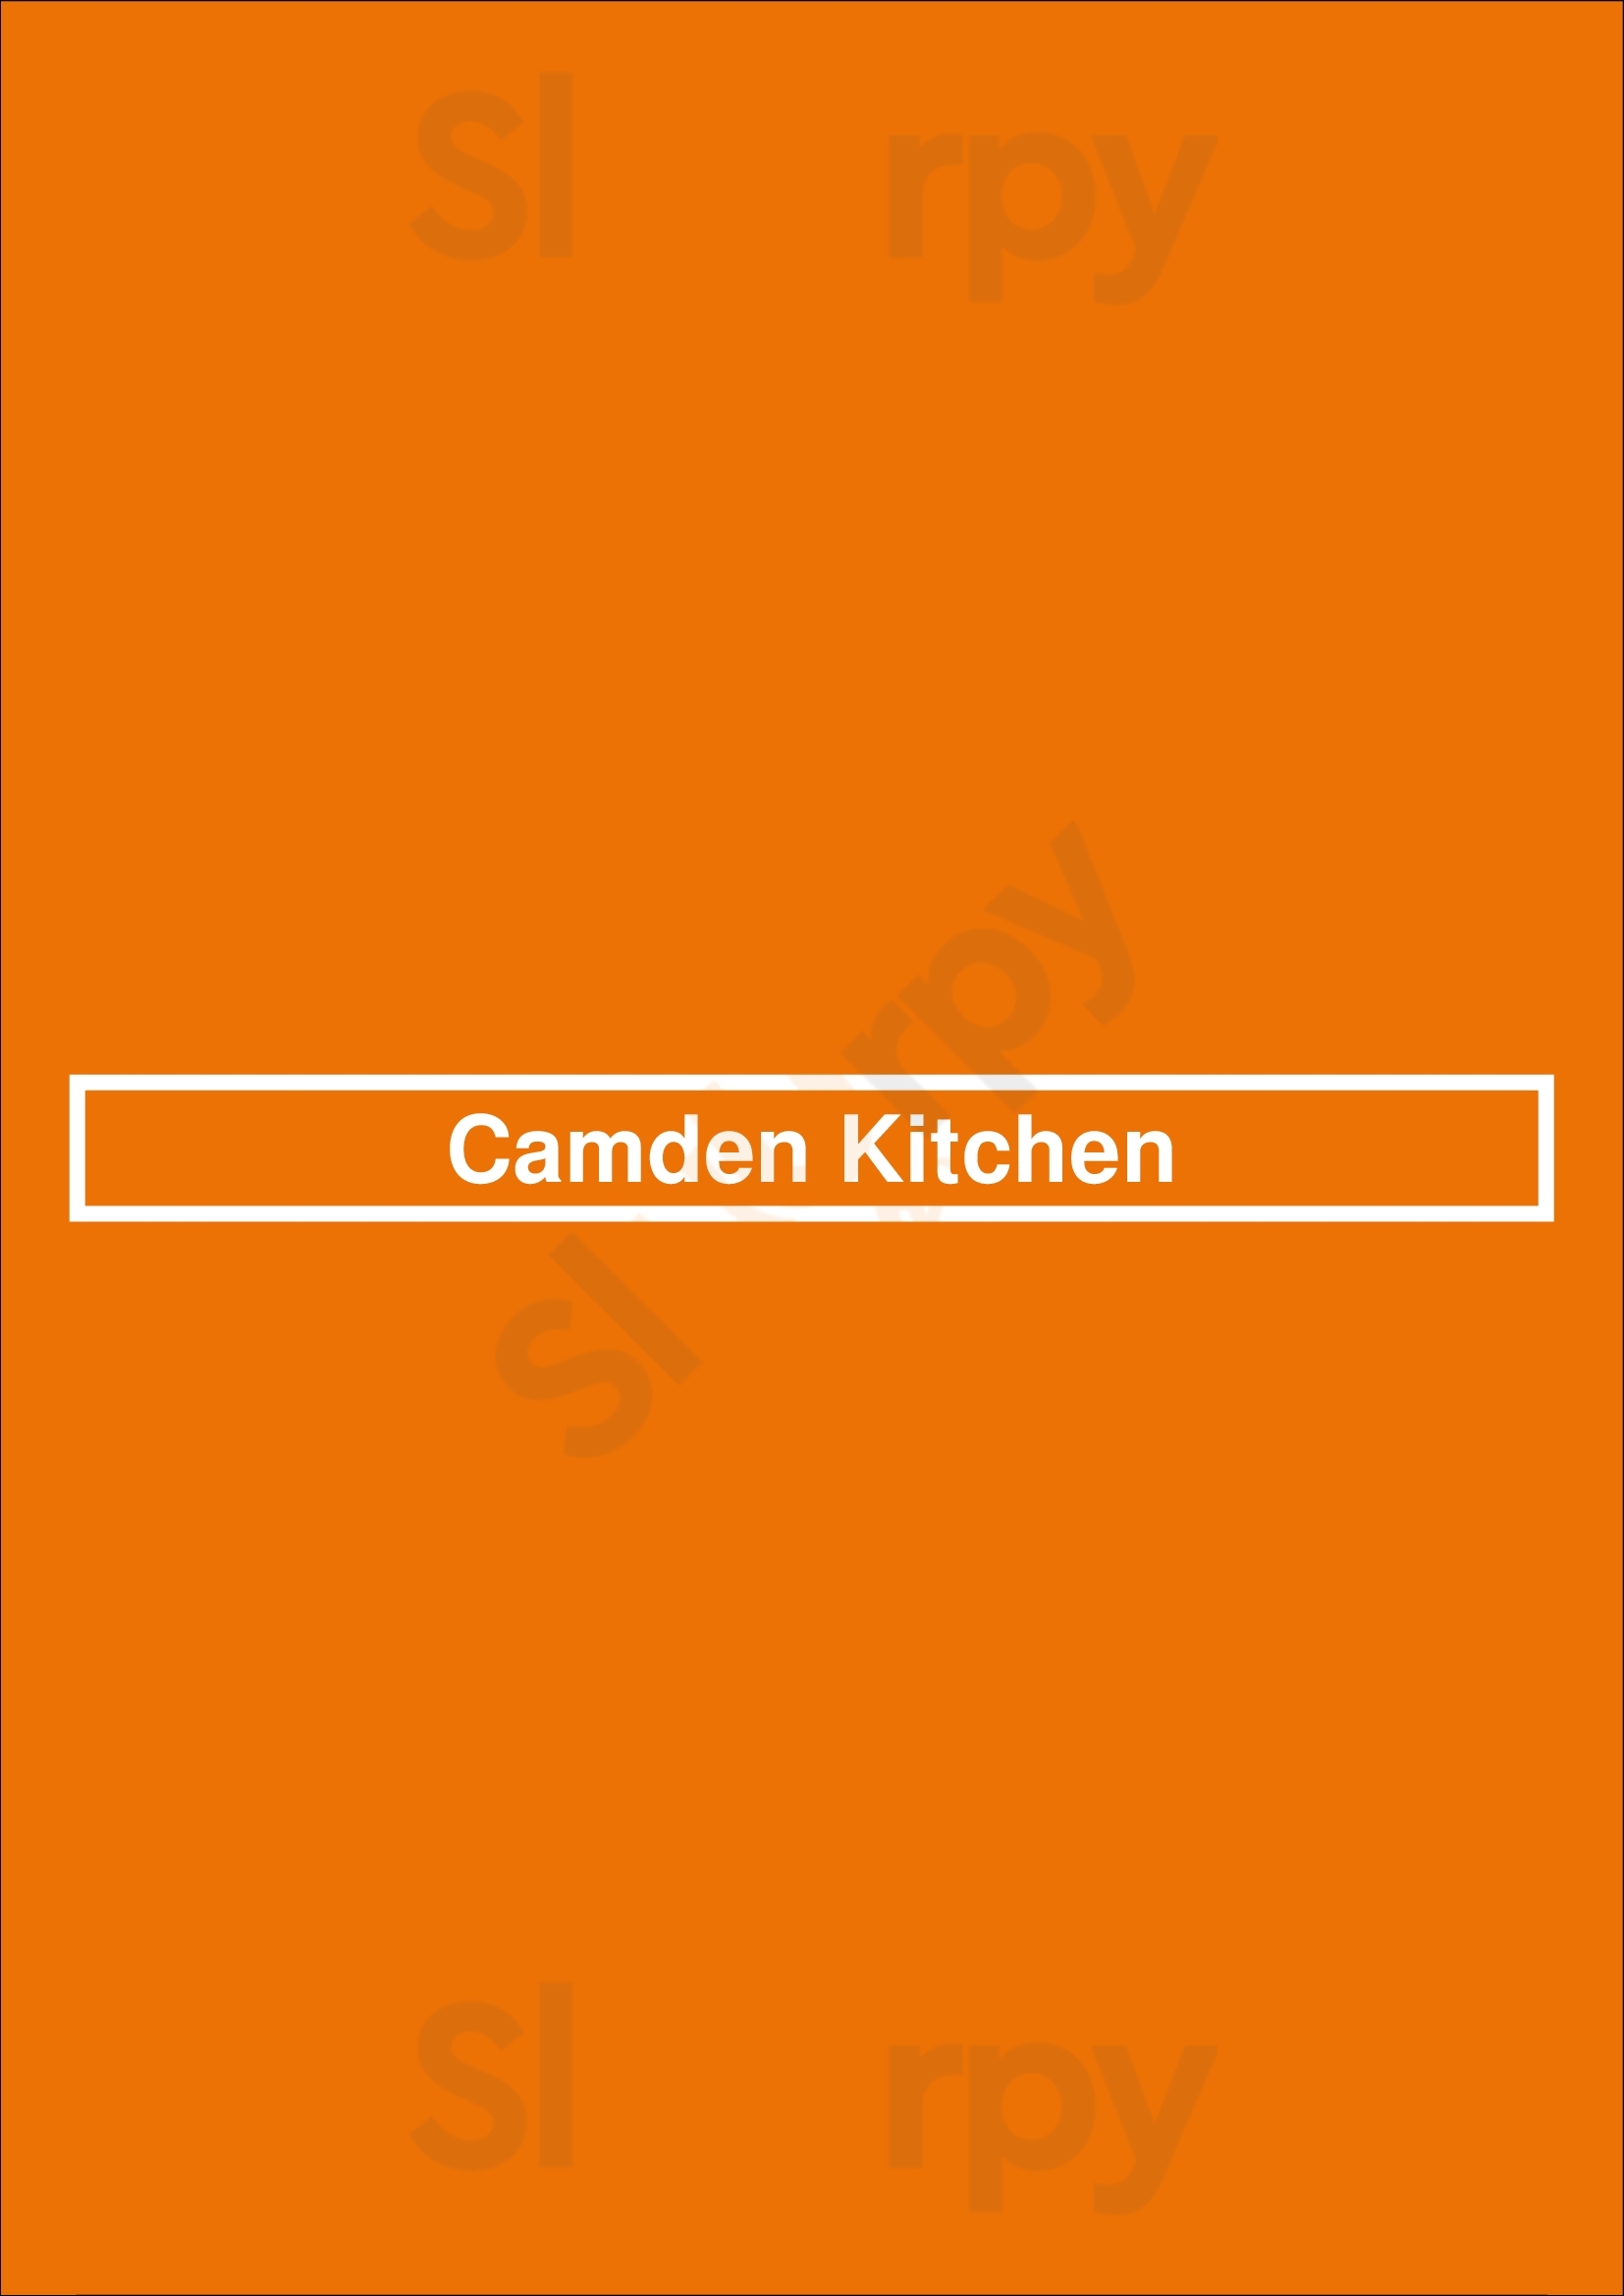 Camden Kitchen Dublin Menu - 1